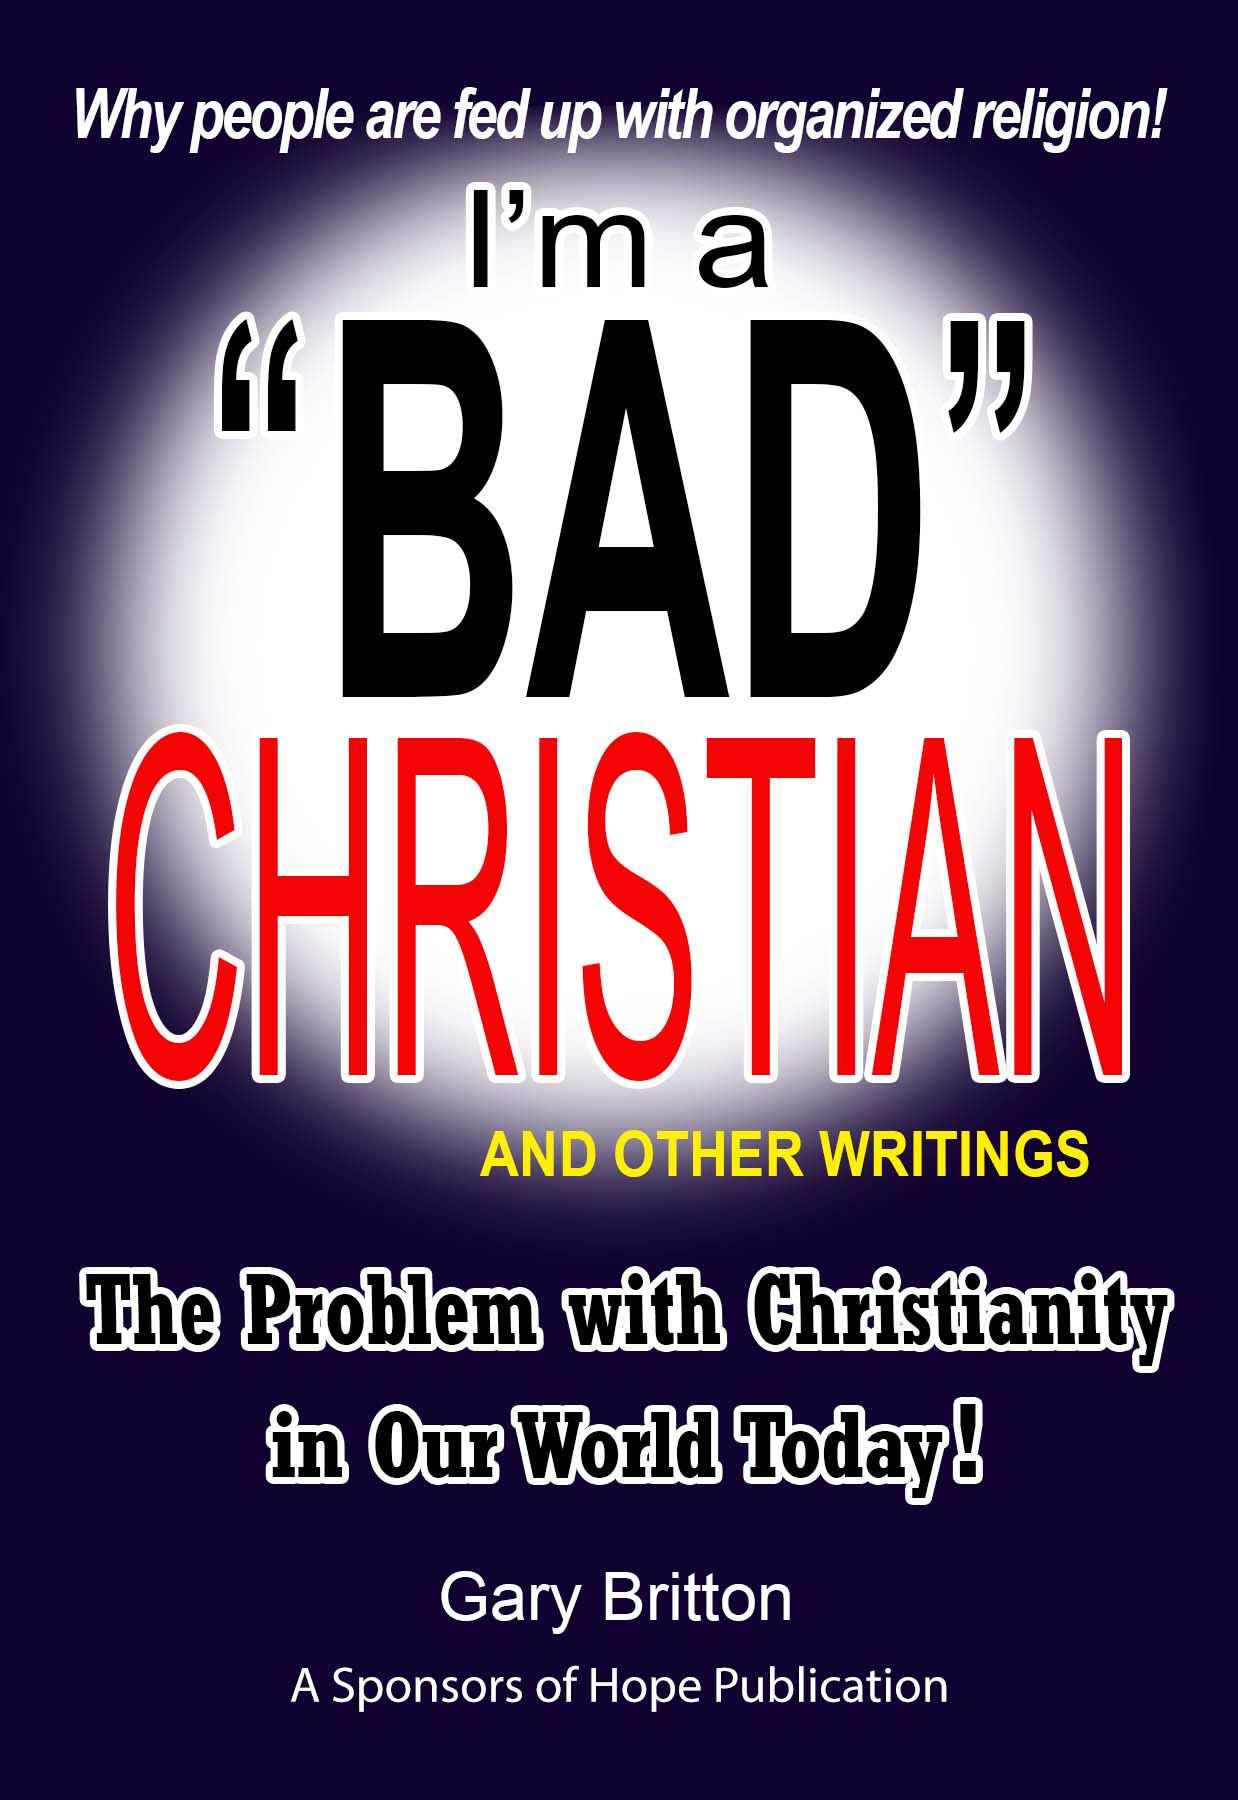 I'm a Bad Christian